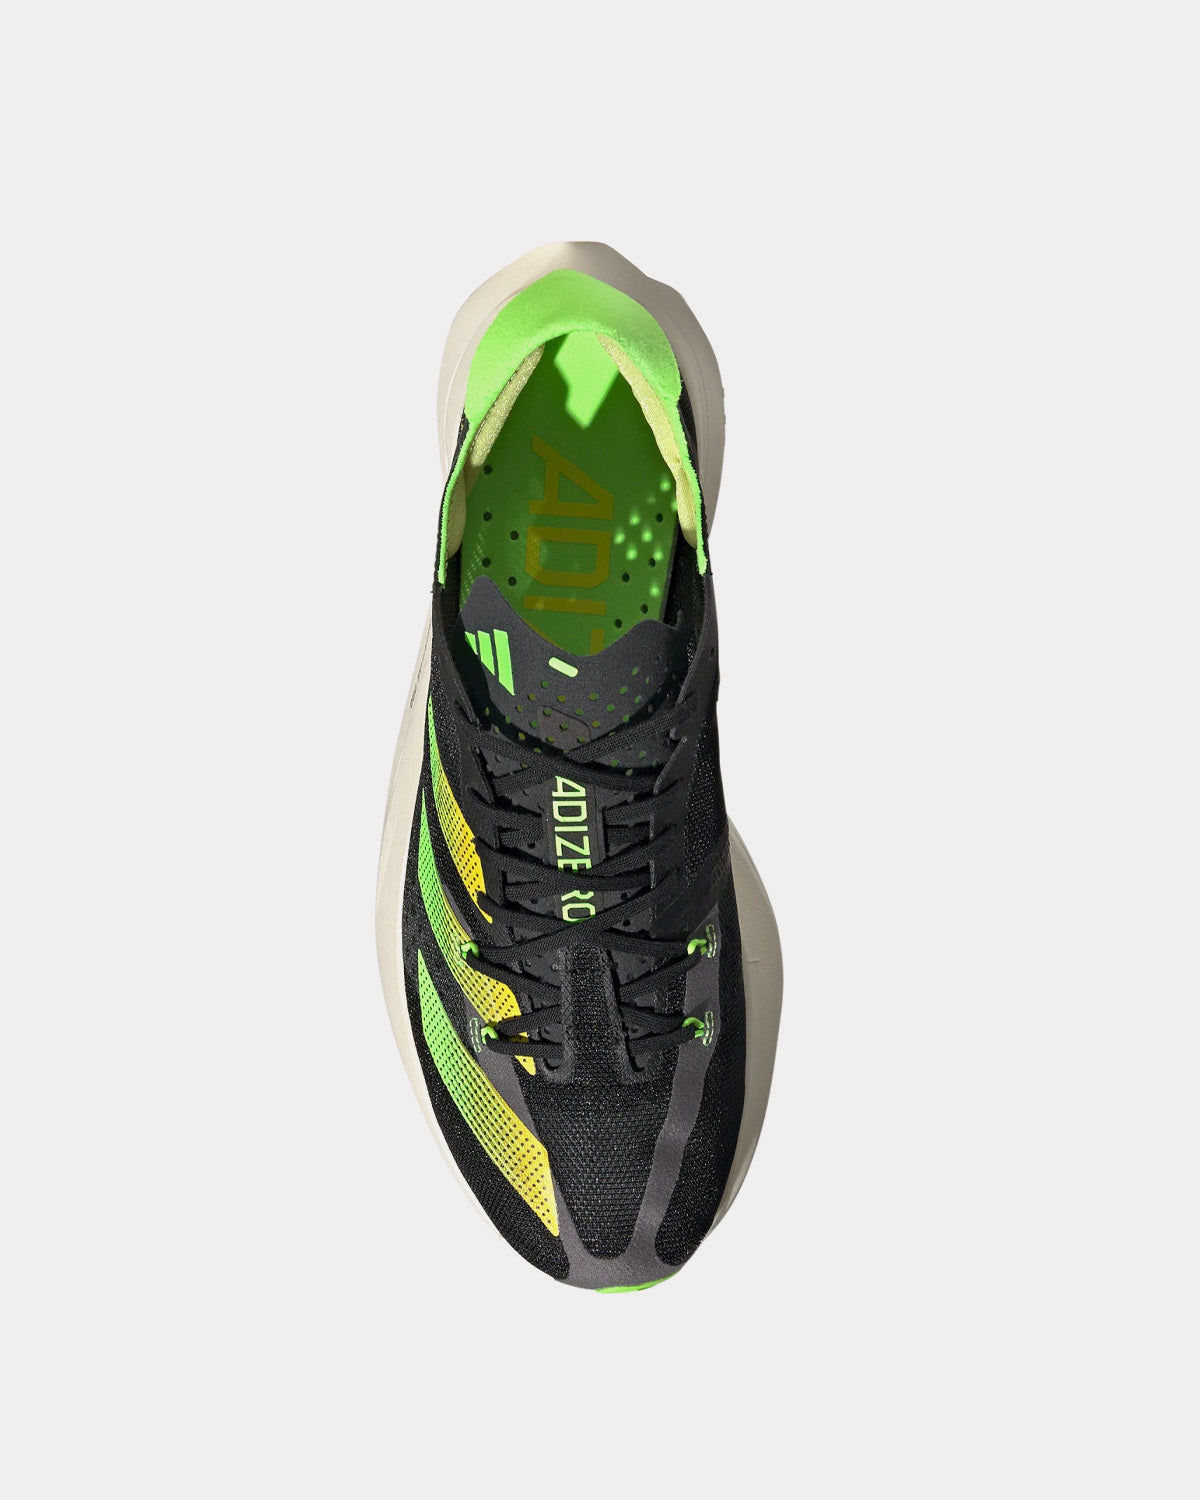 Adidas - Adizero Adios Pro 3 Core Black / Beam Yellow / Solar Green Running Shoes